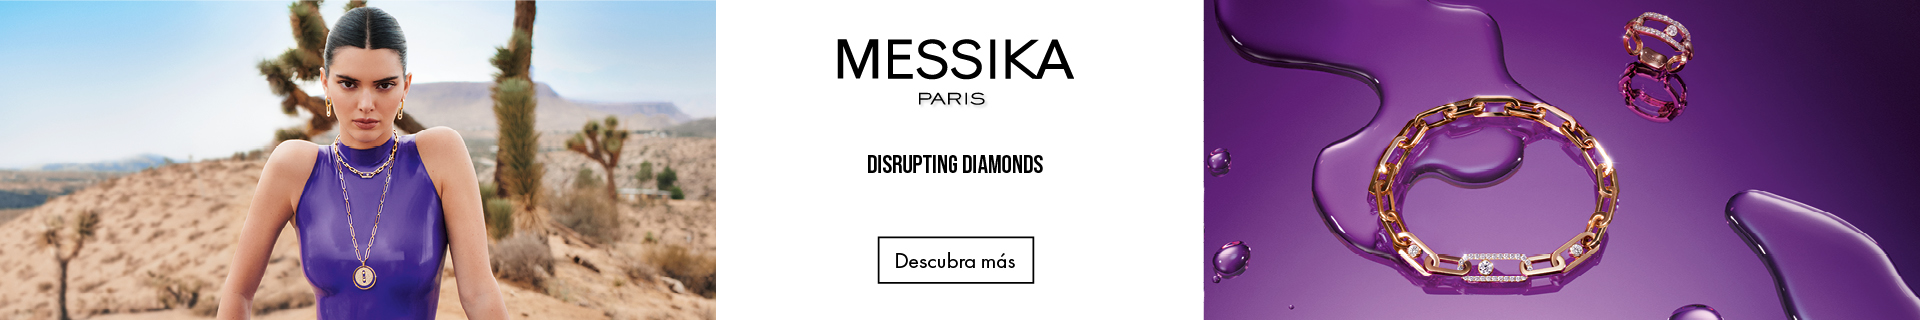 Banner Messika en sitio web EMWA